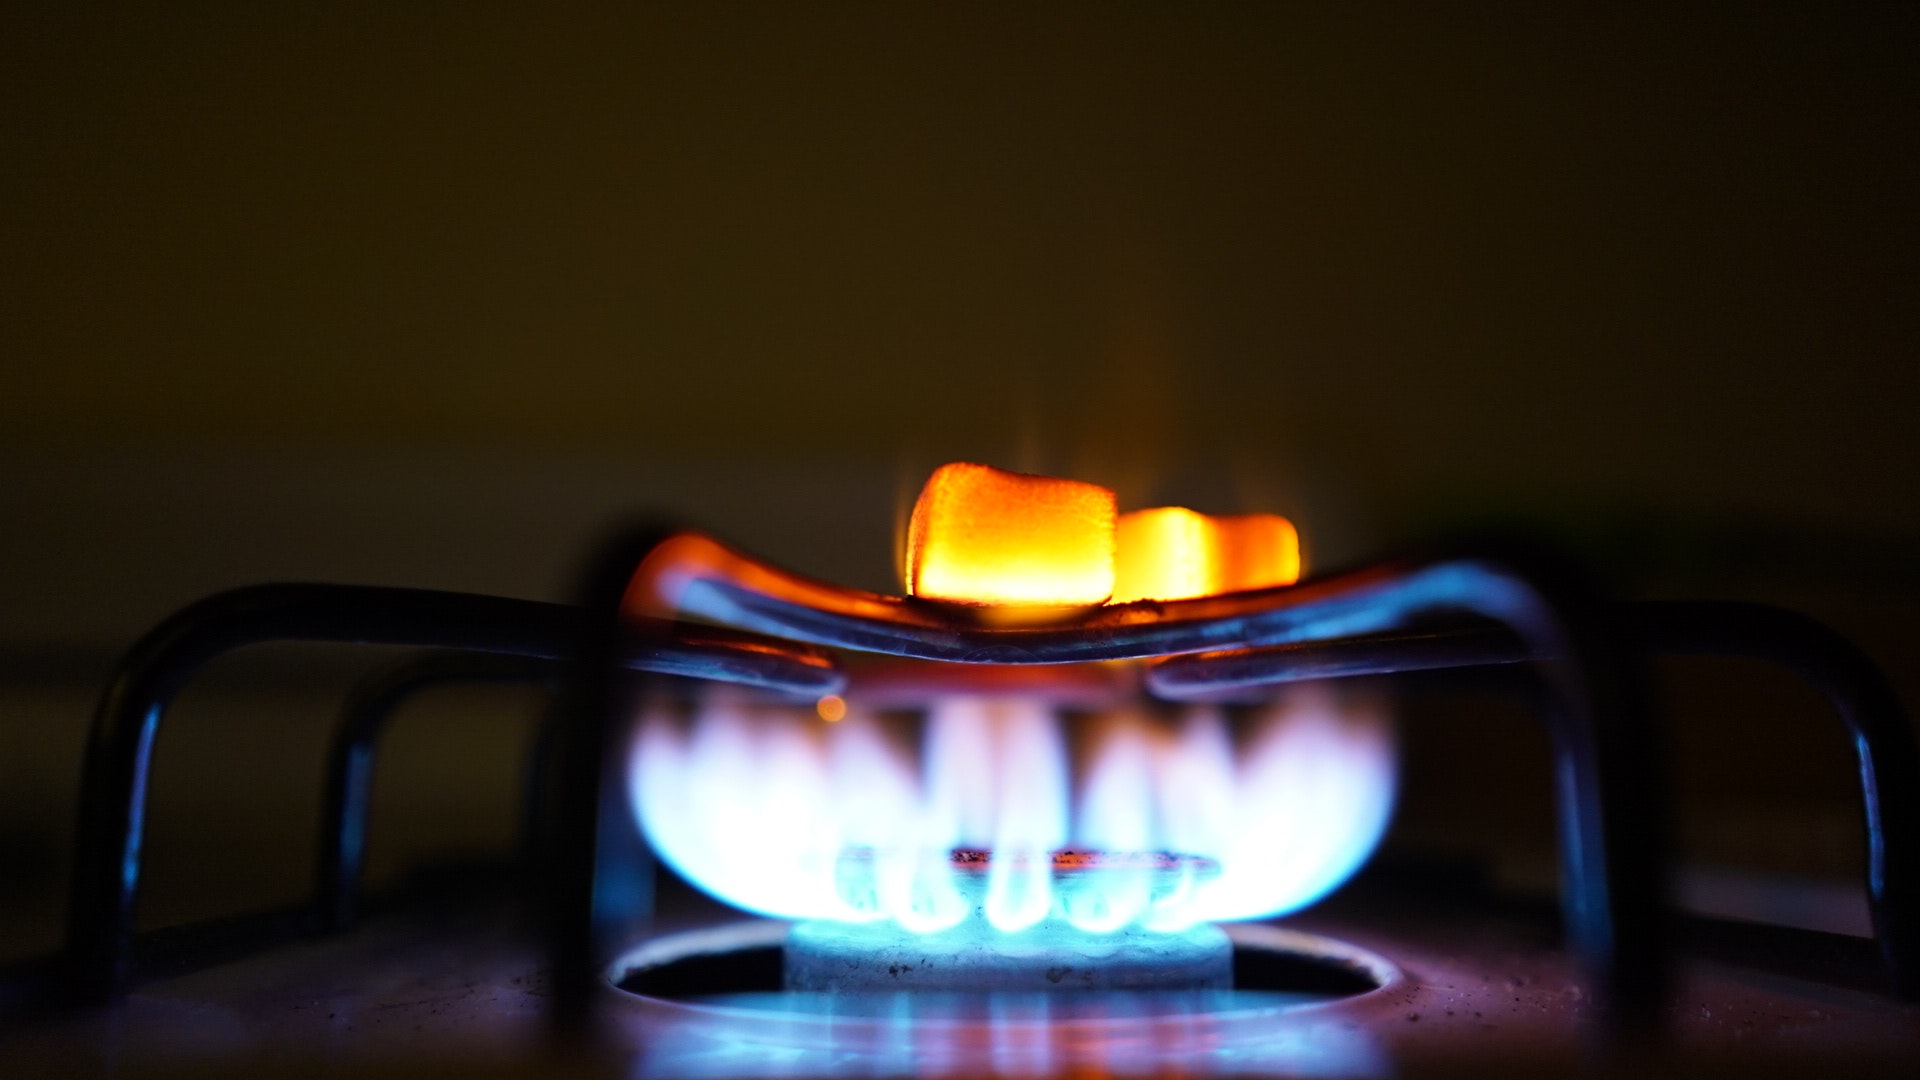 On gas burner photo